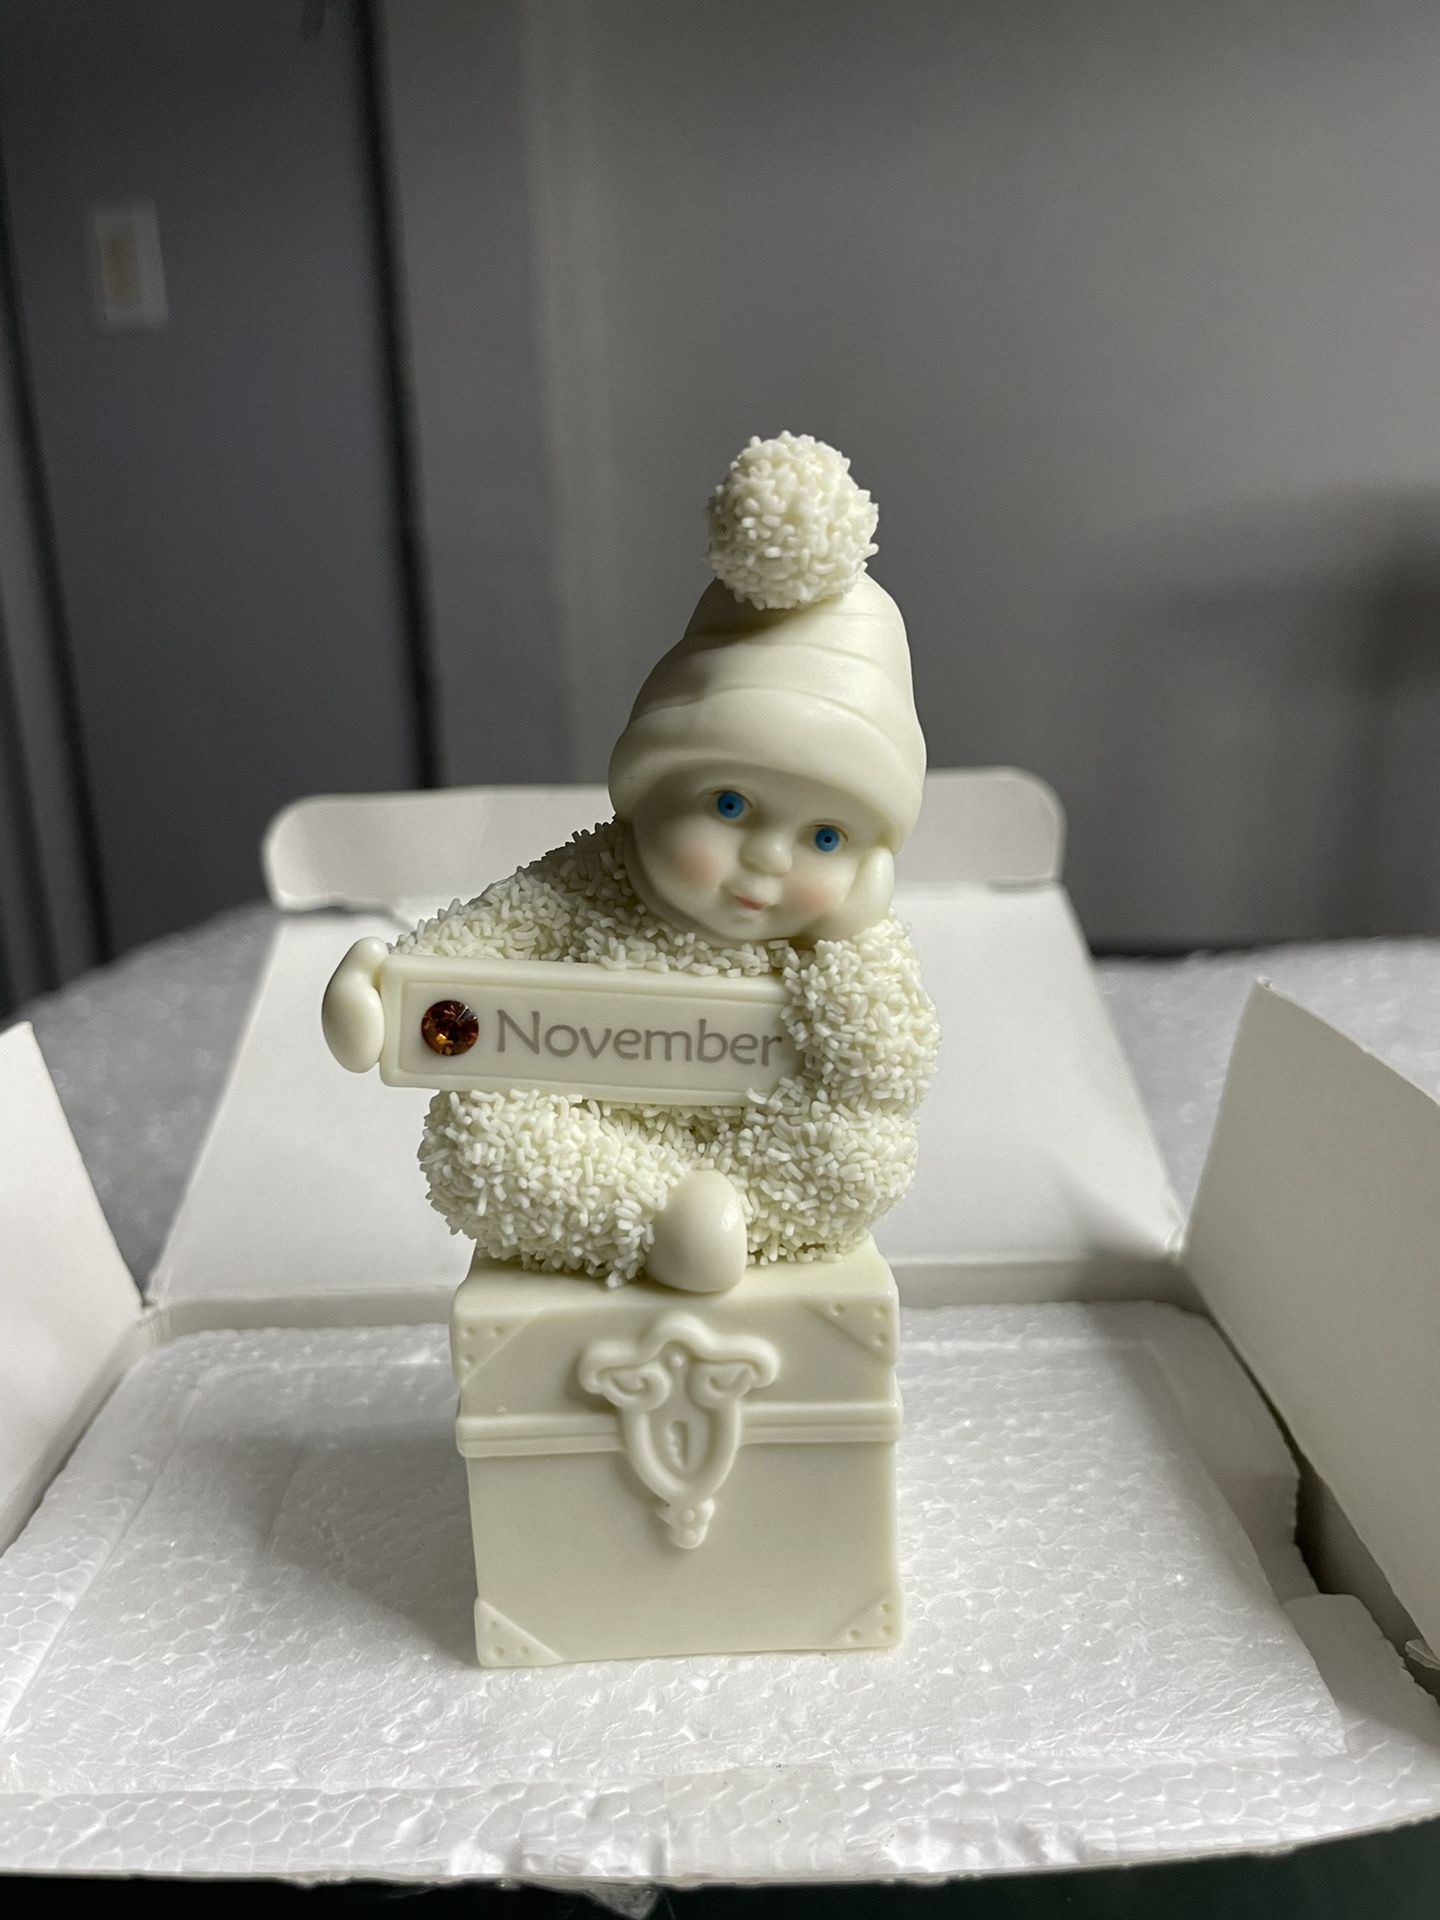 Department 56 Snowbabies November "A Smile To Treasure" Figurine